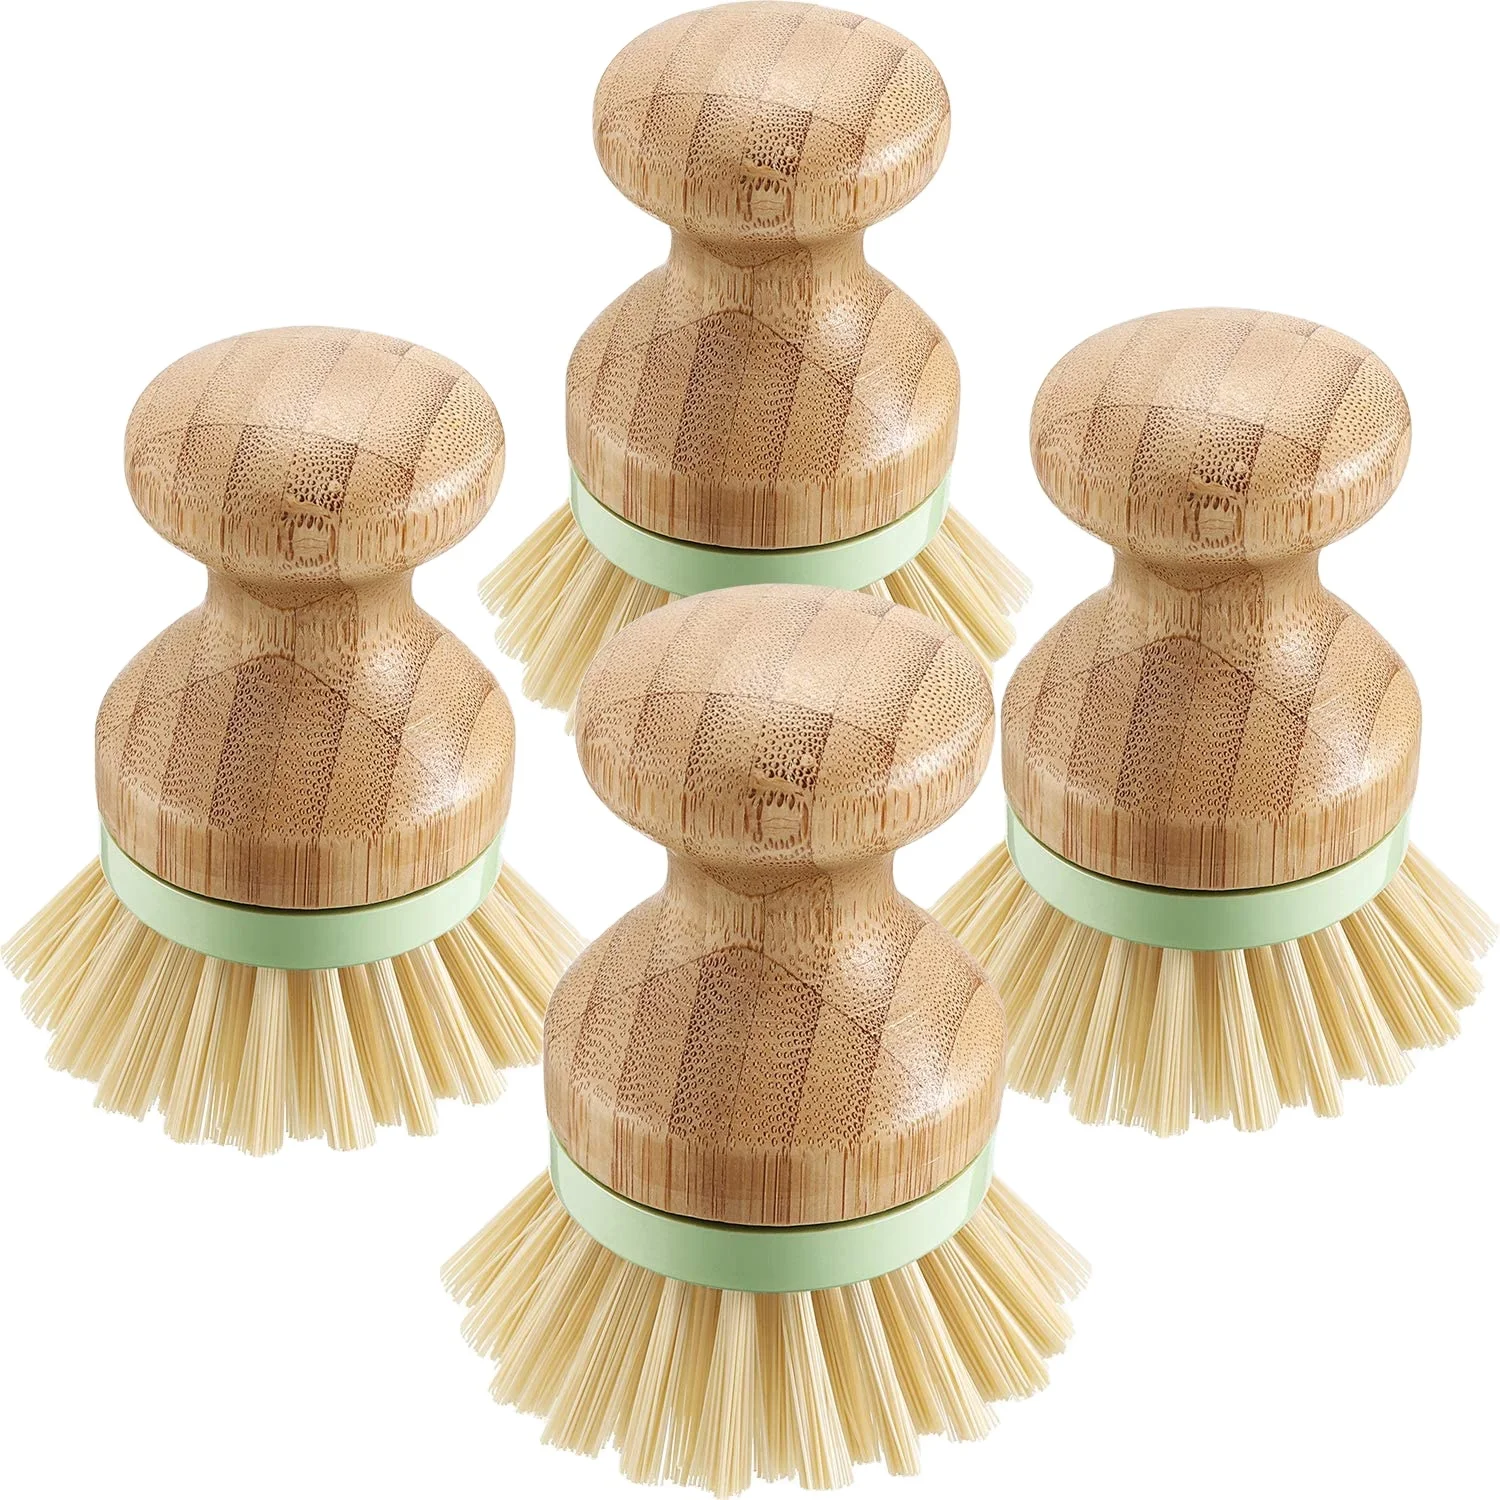 

Bamboo Mini Scrub Brush Coconut Bristles Pot Brushes Dish Scrubber for Cast Iron Skillet, Kitchen Sink Bathroom Household Clean